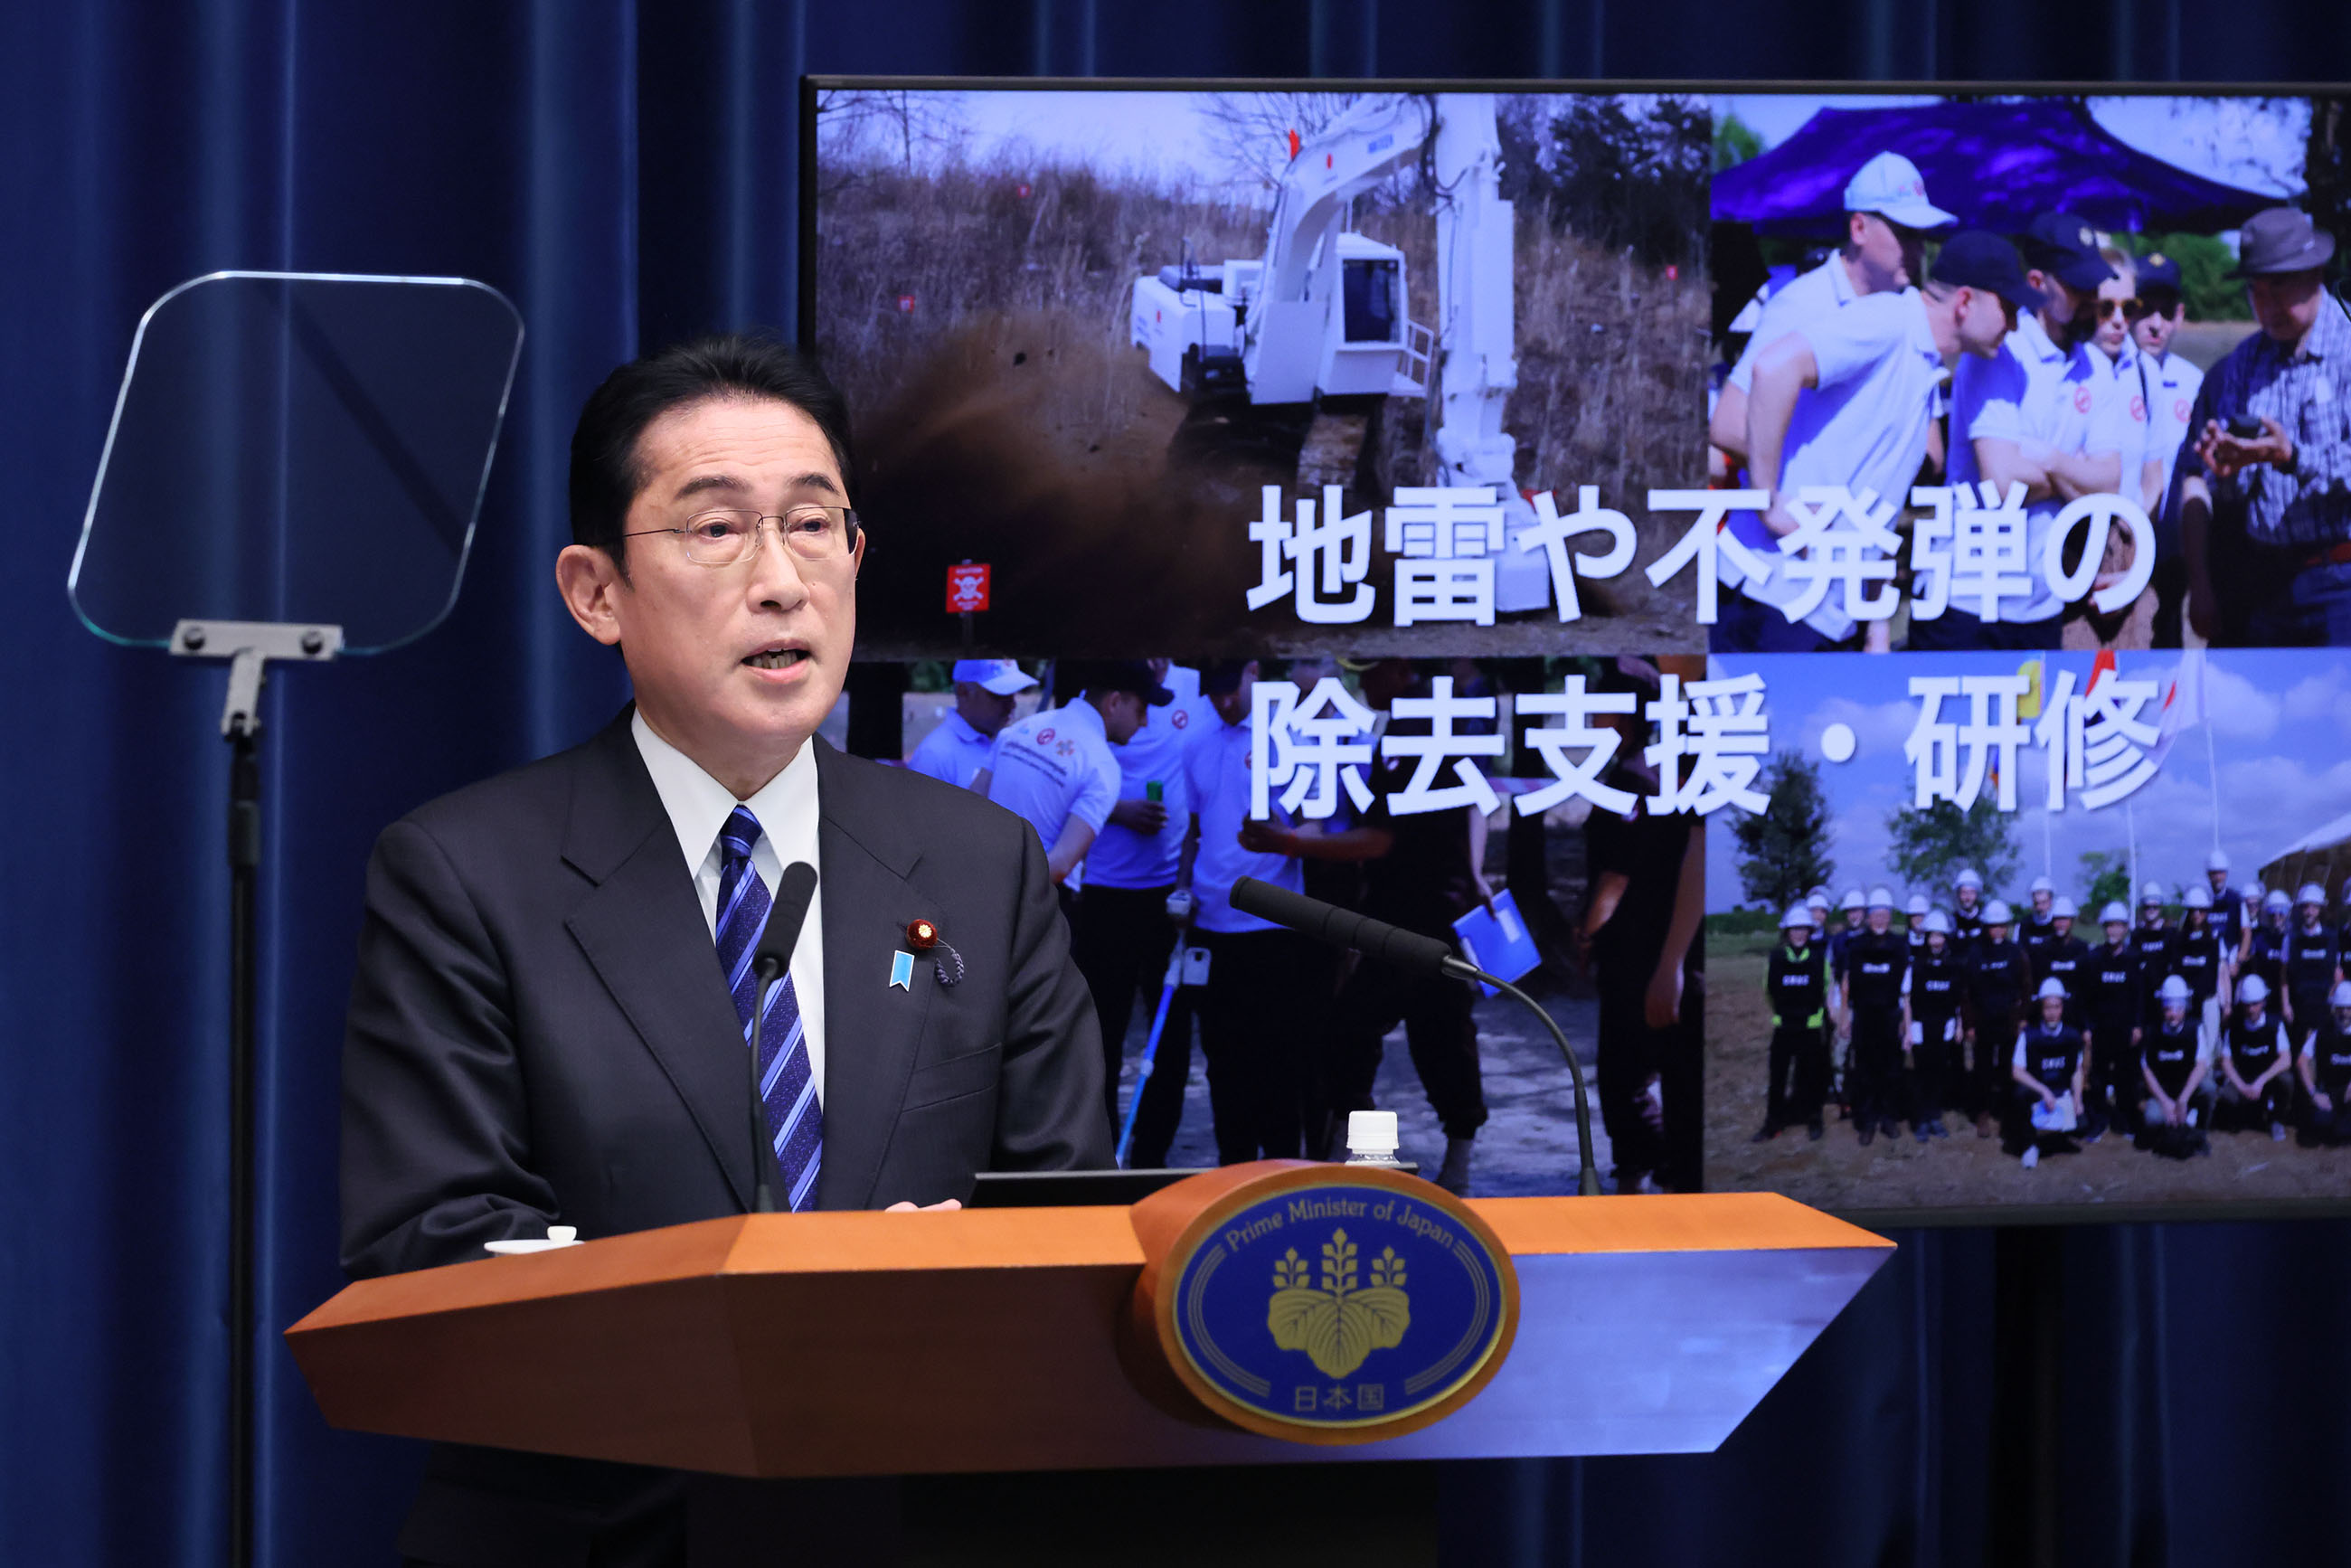 Prime Minister Kishida making an opening statement (12)